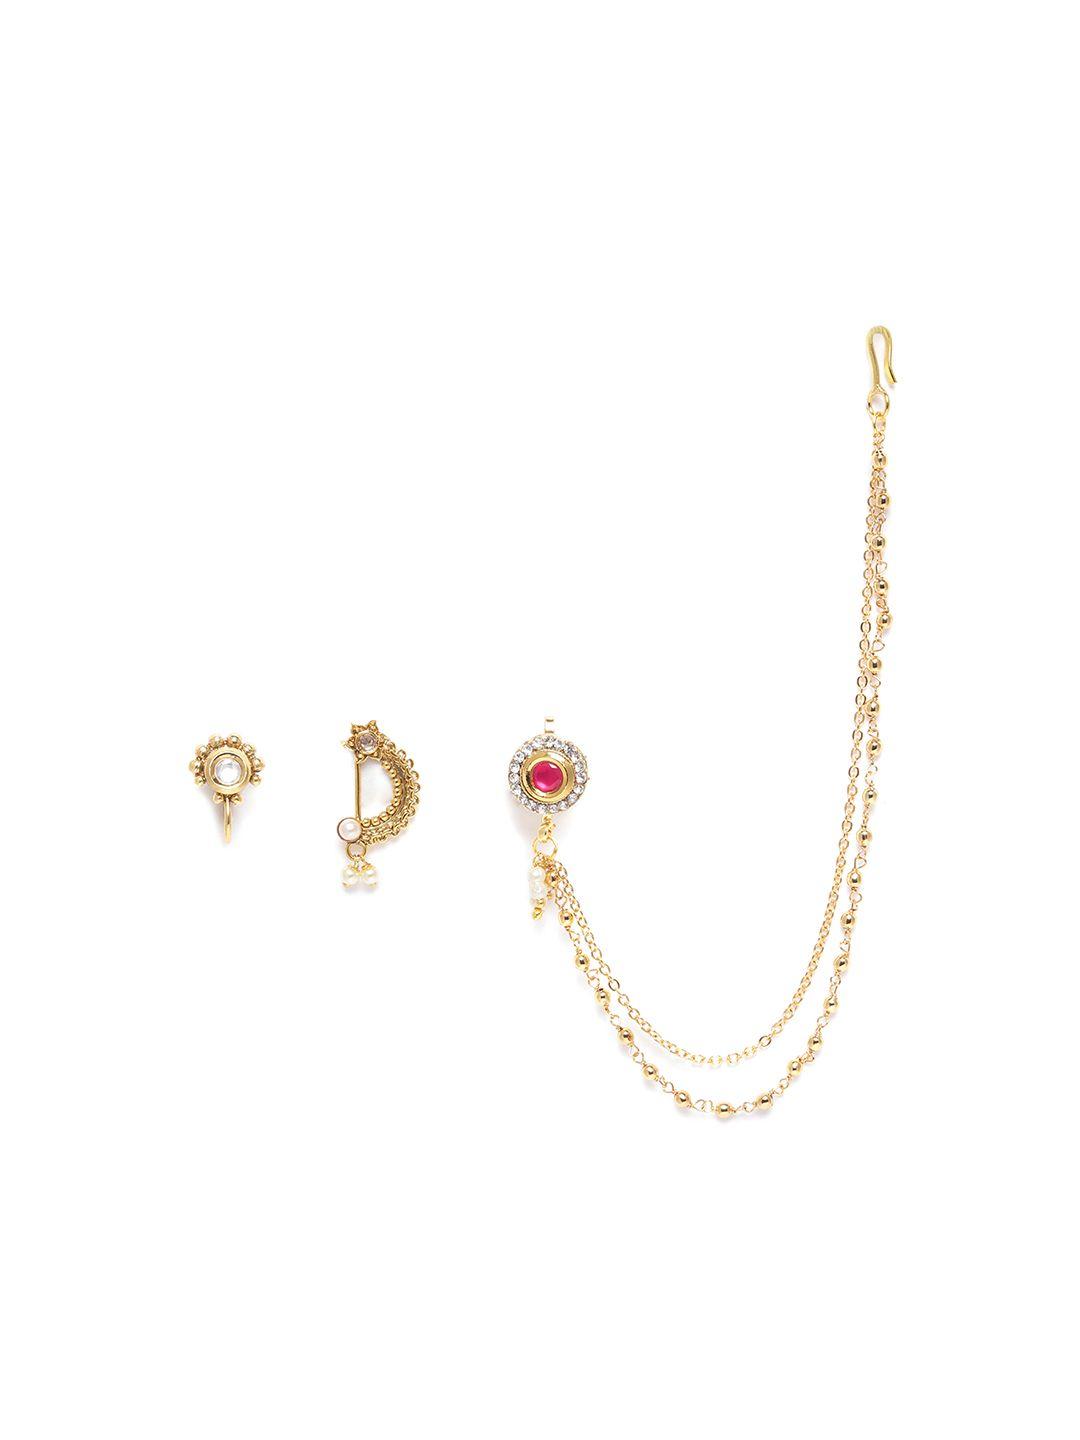 jewels gehna set of 3 gold-toned kundan-studded & beaded nose pins